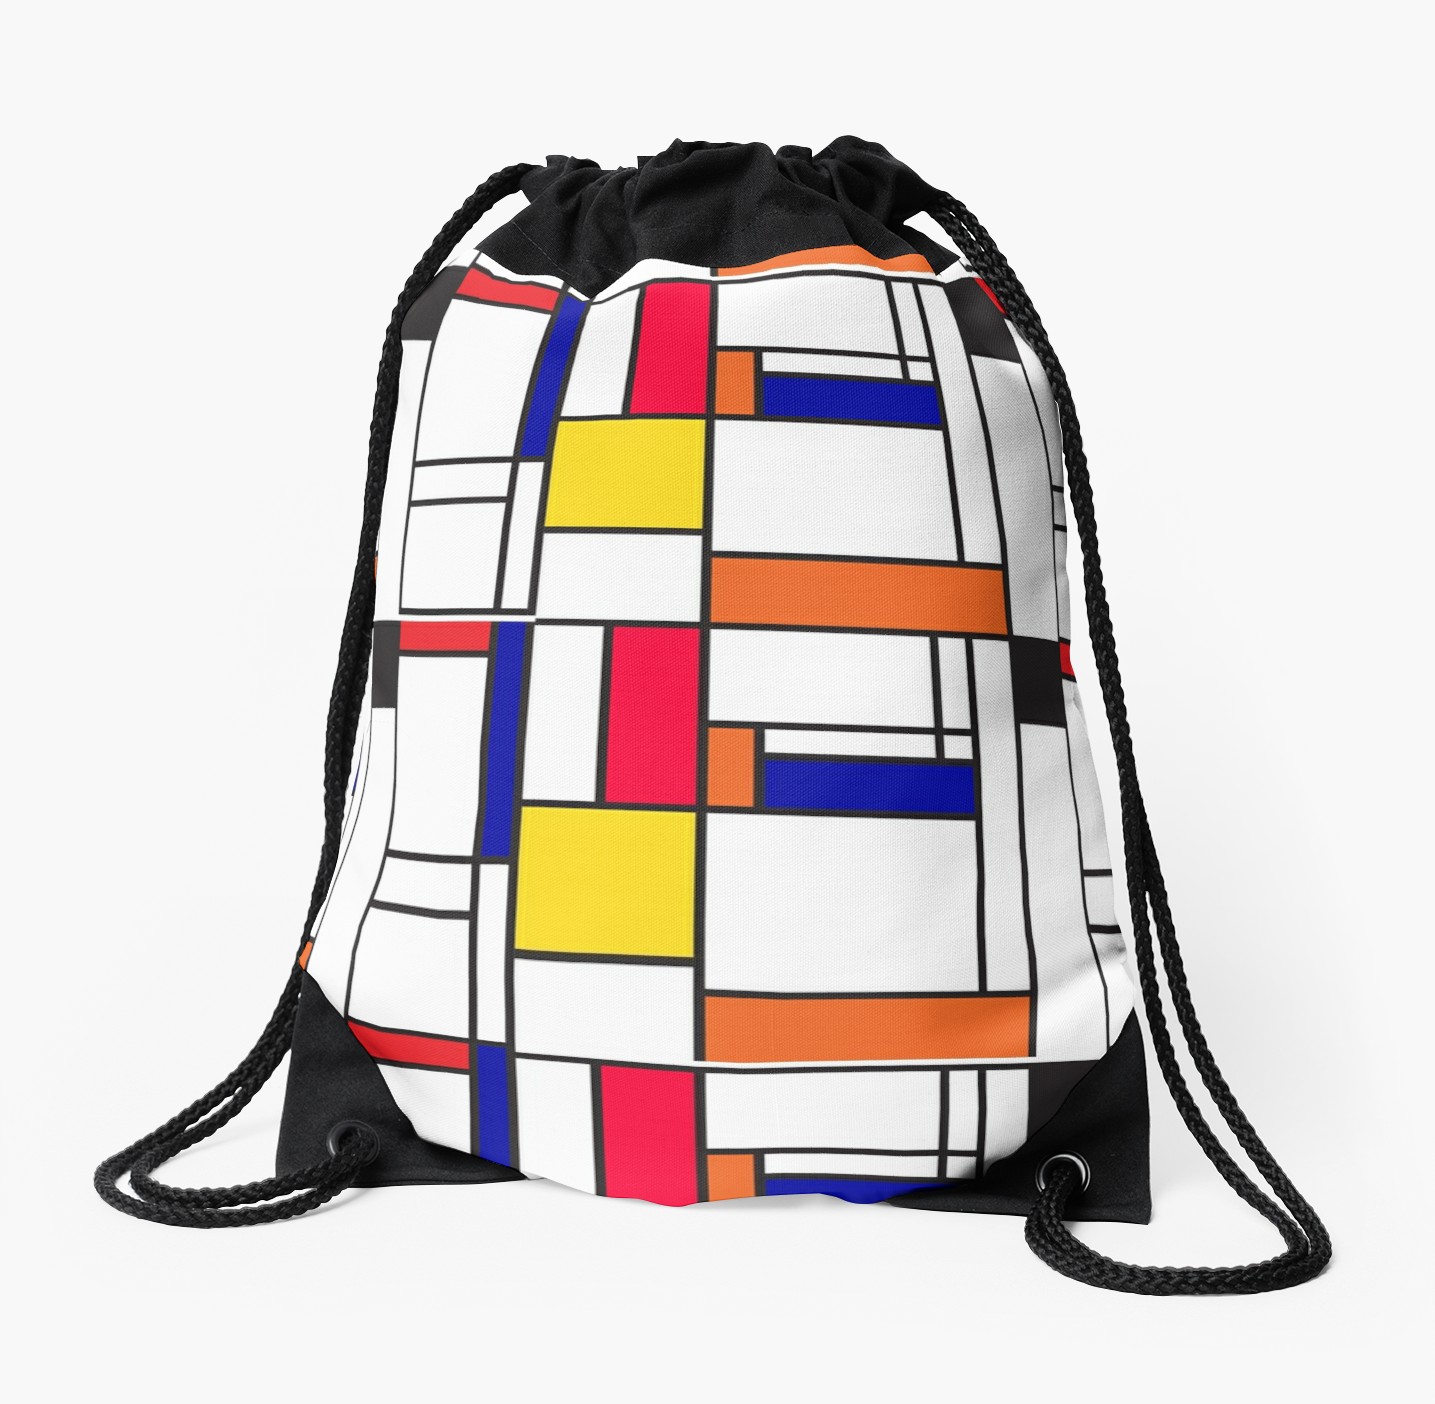 Mondrian inspired drawstring bag